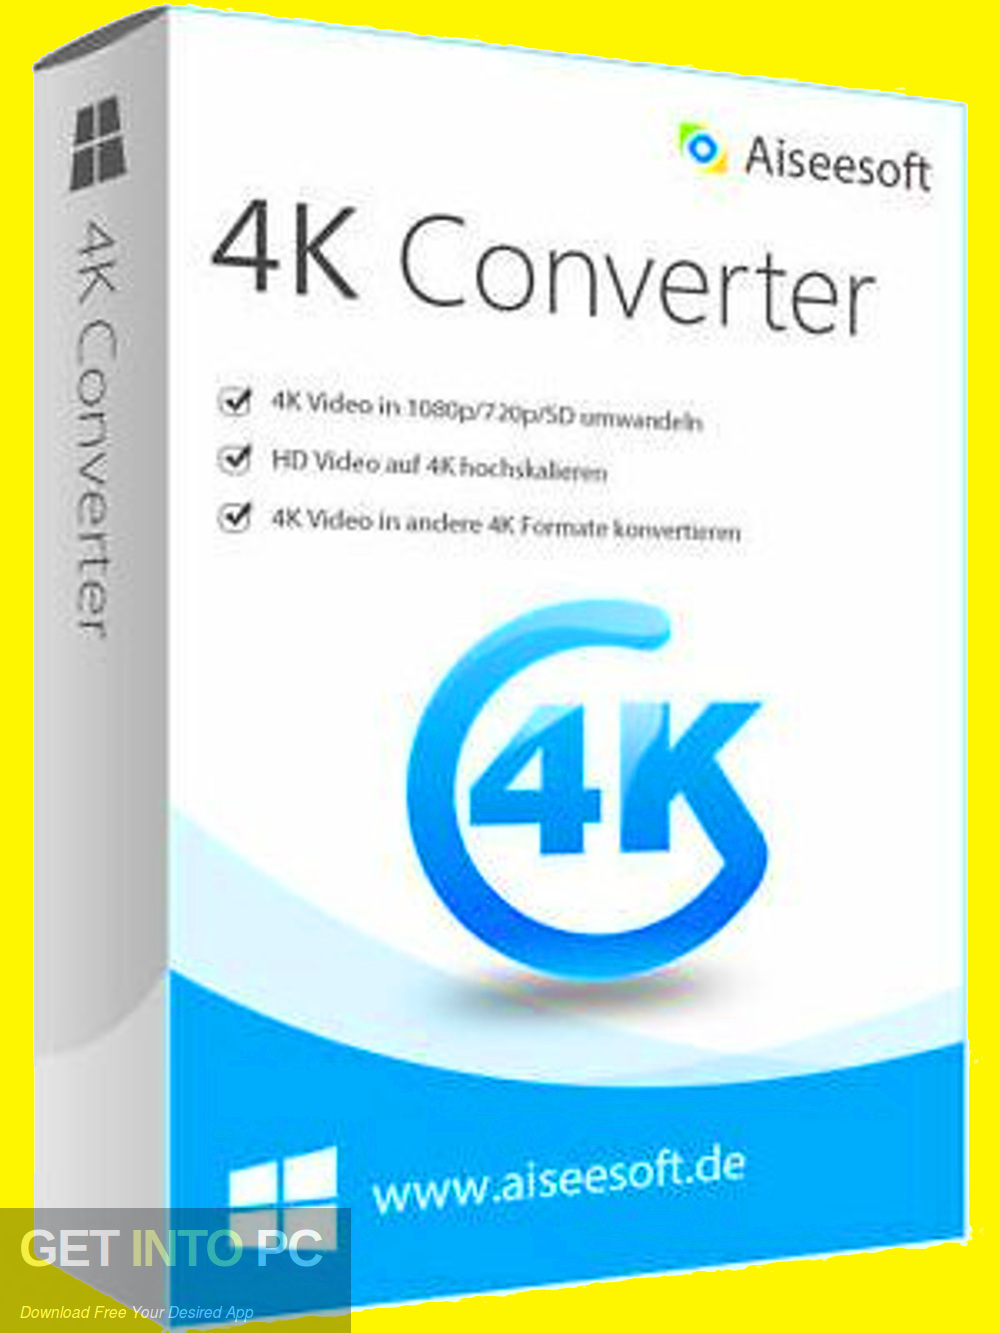 Aiseesoft 4K Converter Pro 2019 Free Download-GetintoPC.com